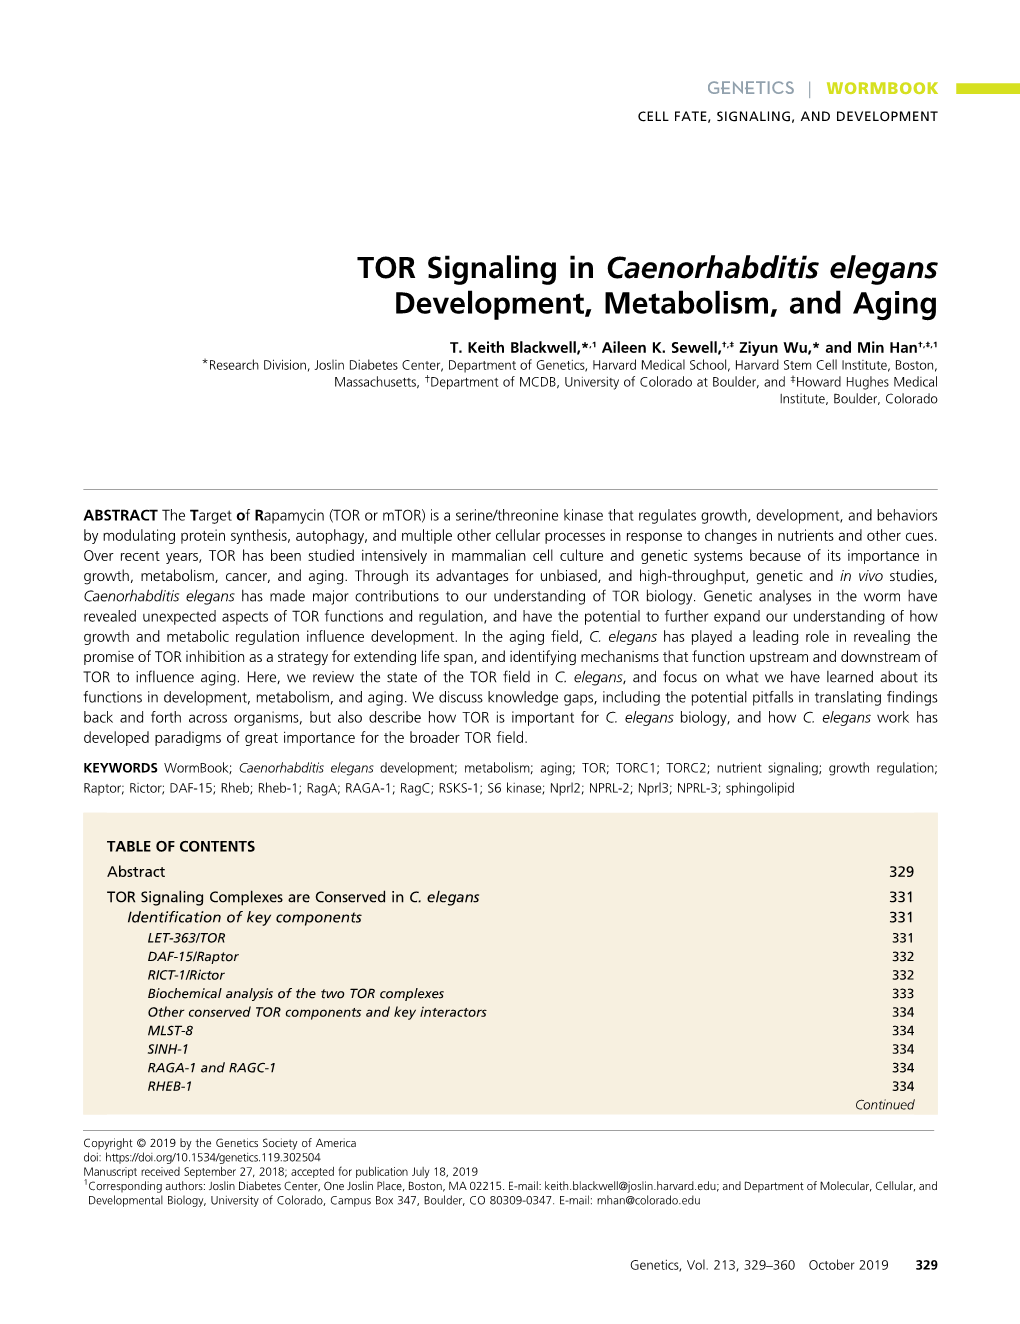 TOR Signaling in Caenorhabditis Elegans Development, Metabolism, and Aging